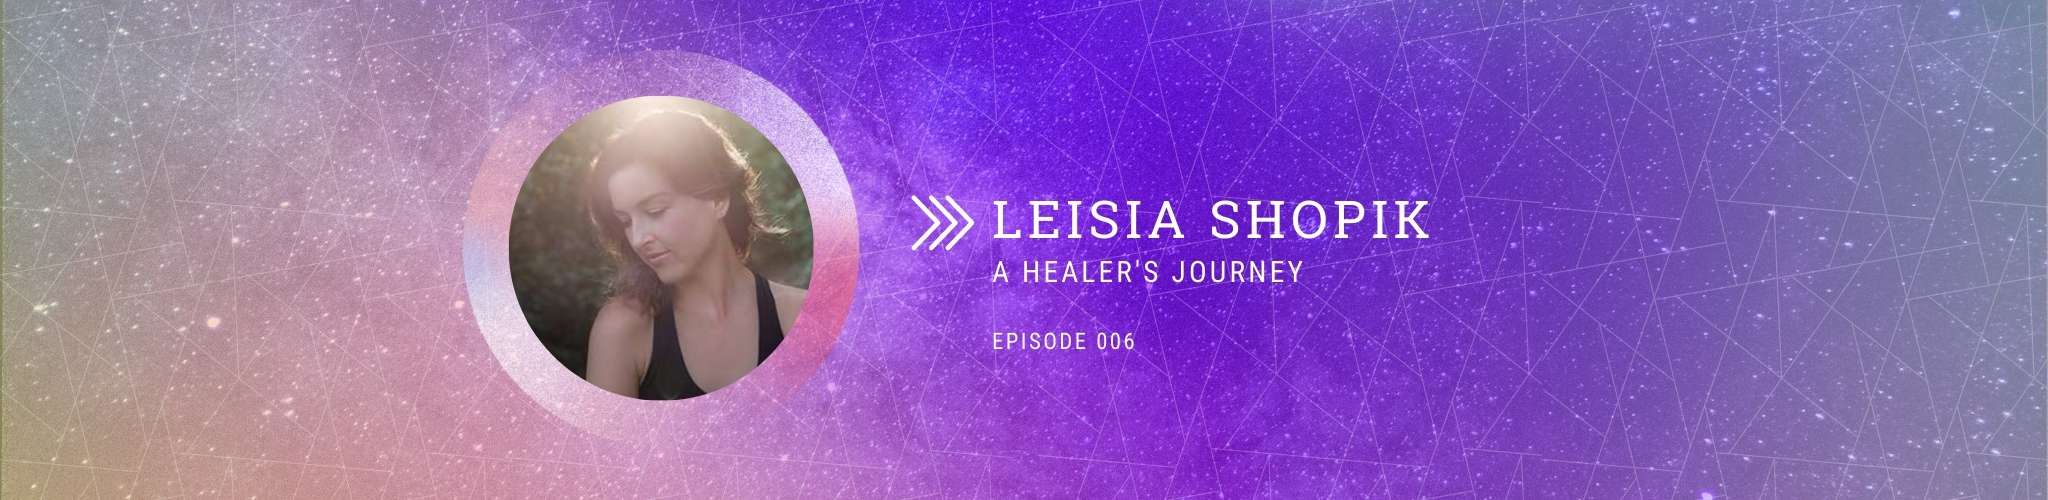 healer's journey leisia shopik